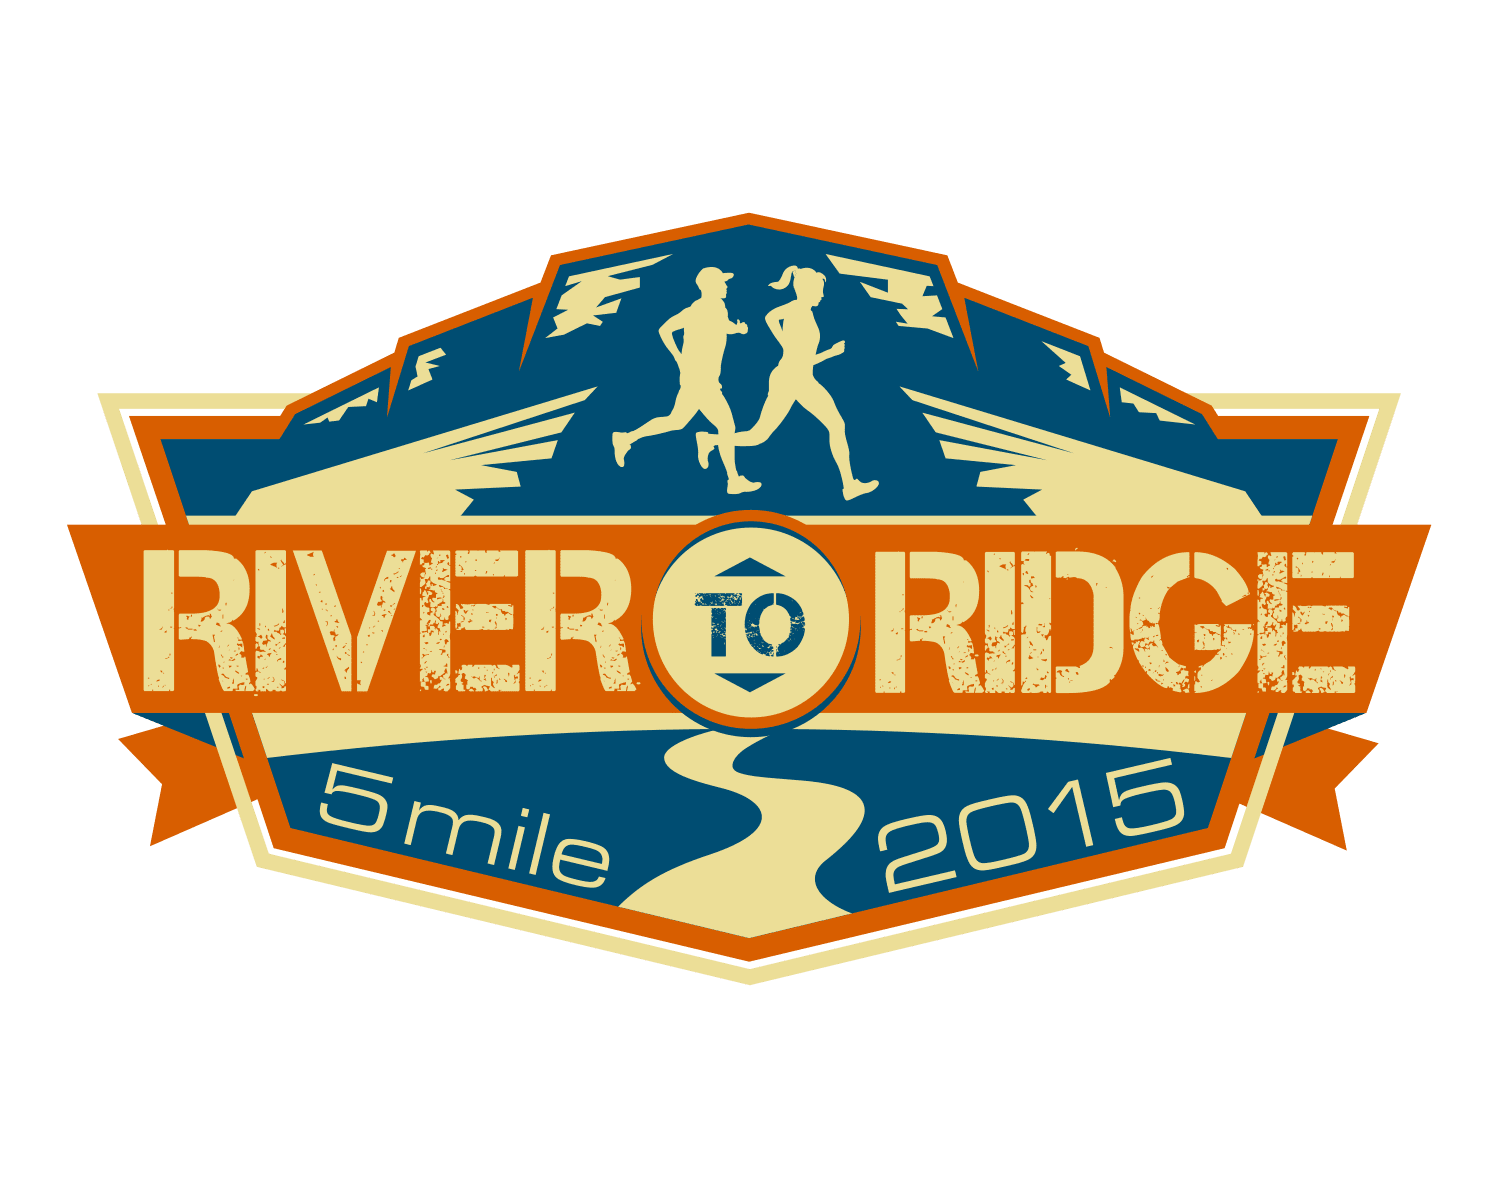 River to Ridge 5 Mile logo on RaceRaves